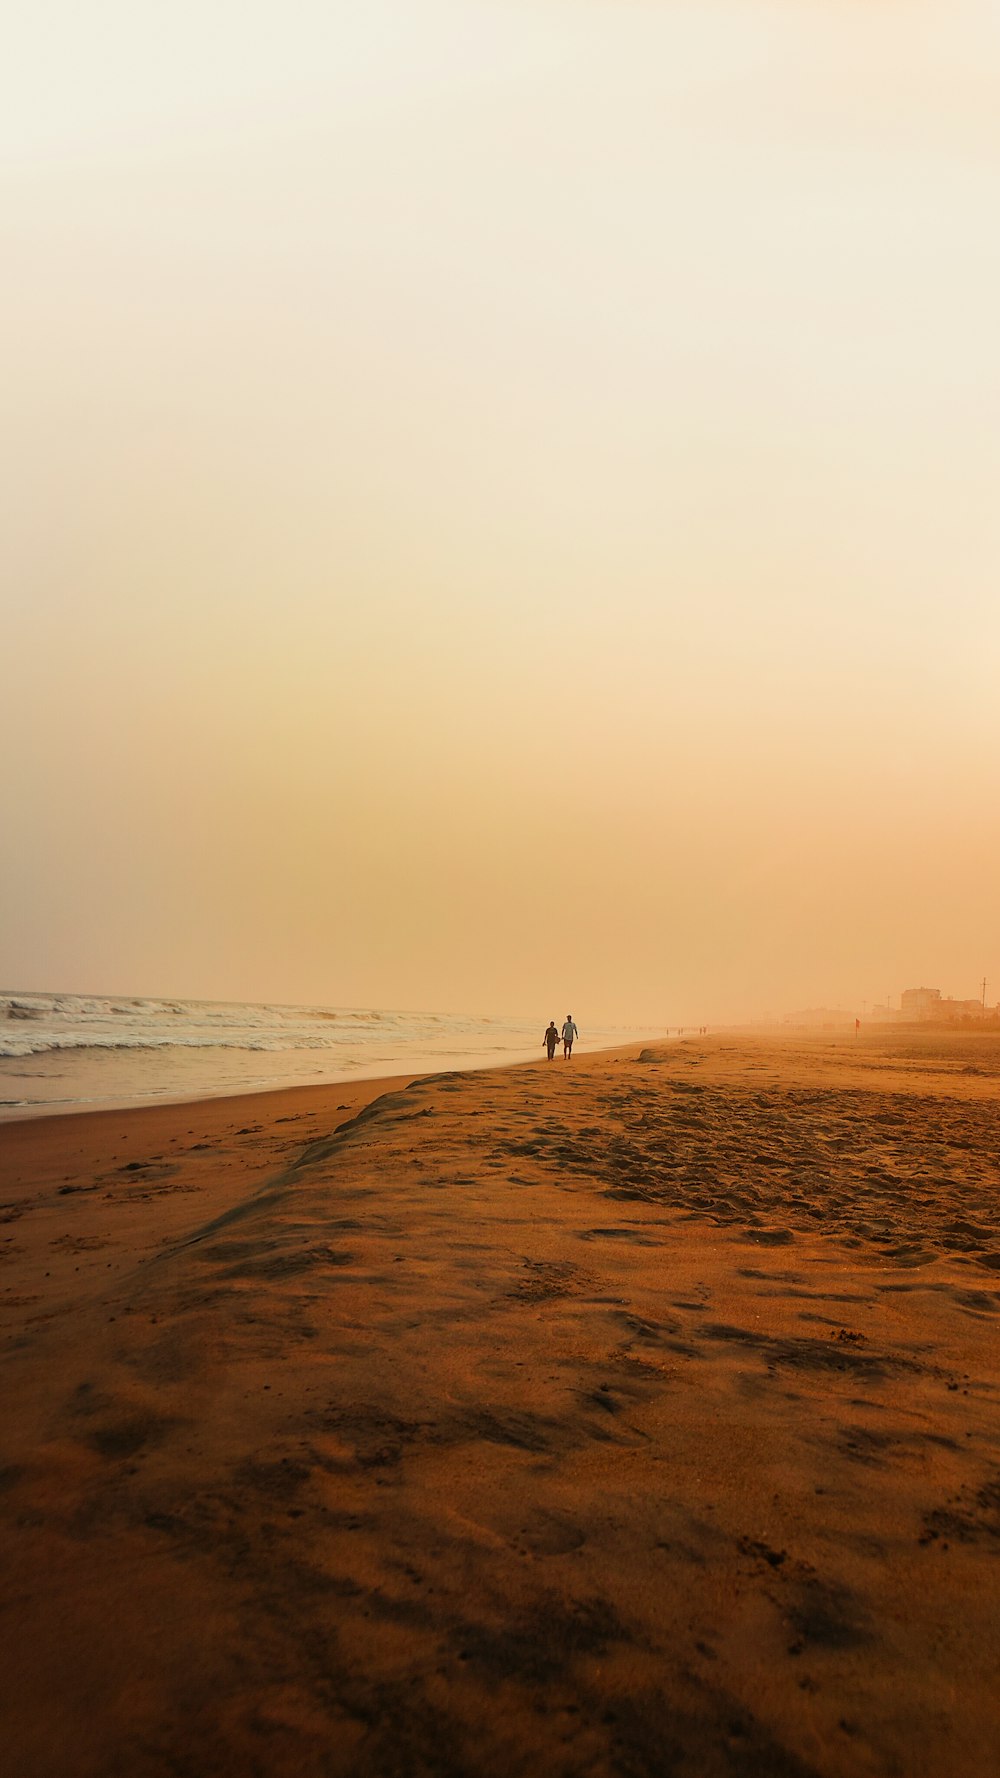 a couple of people walking along a sandy beach